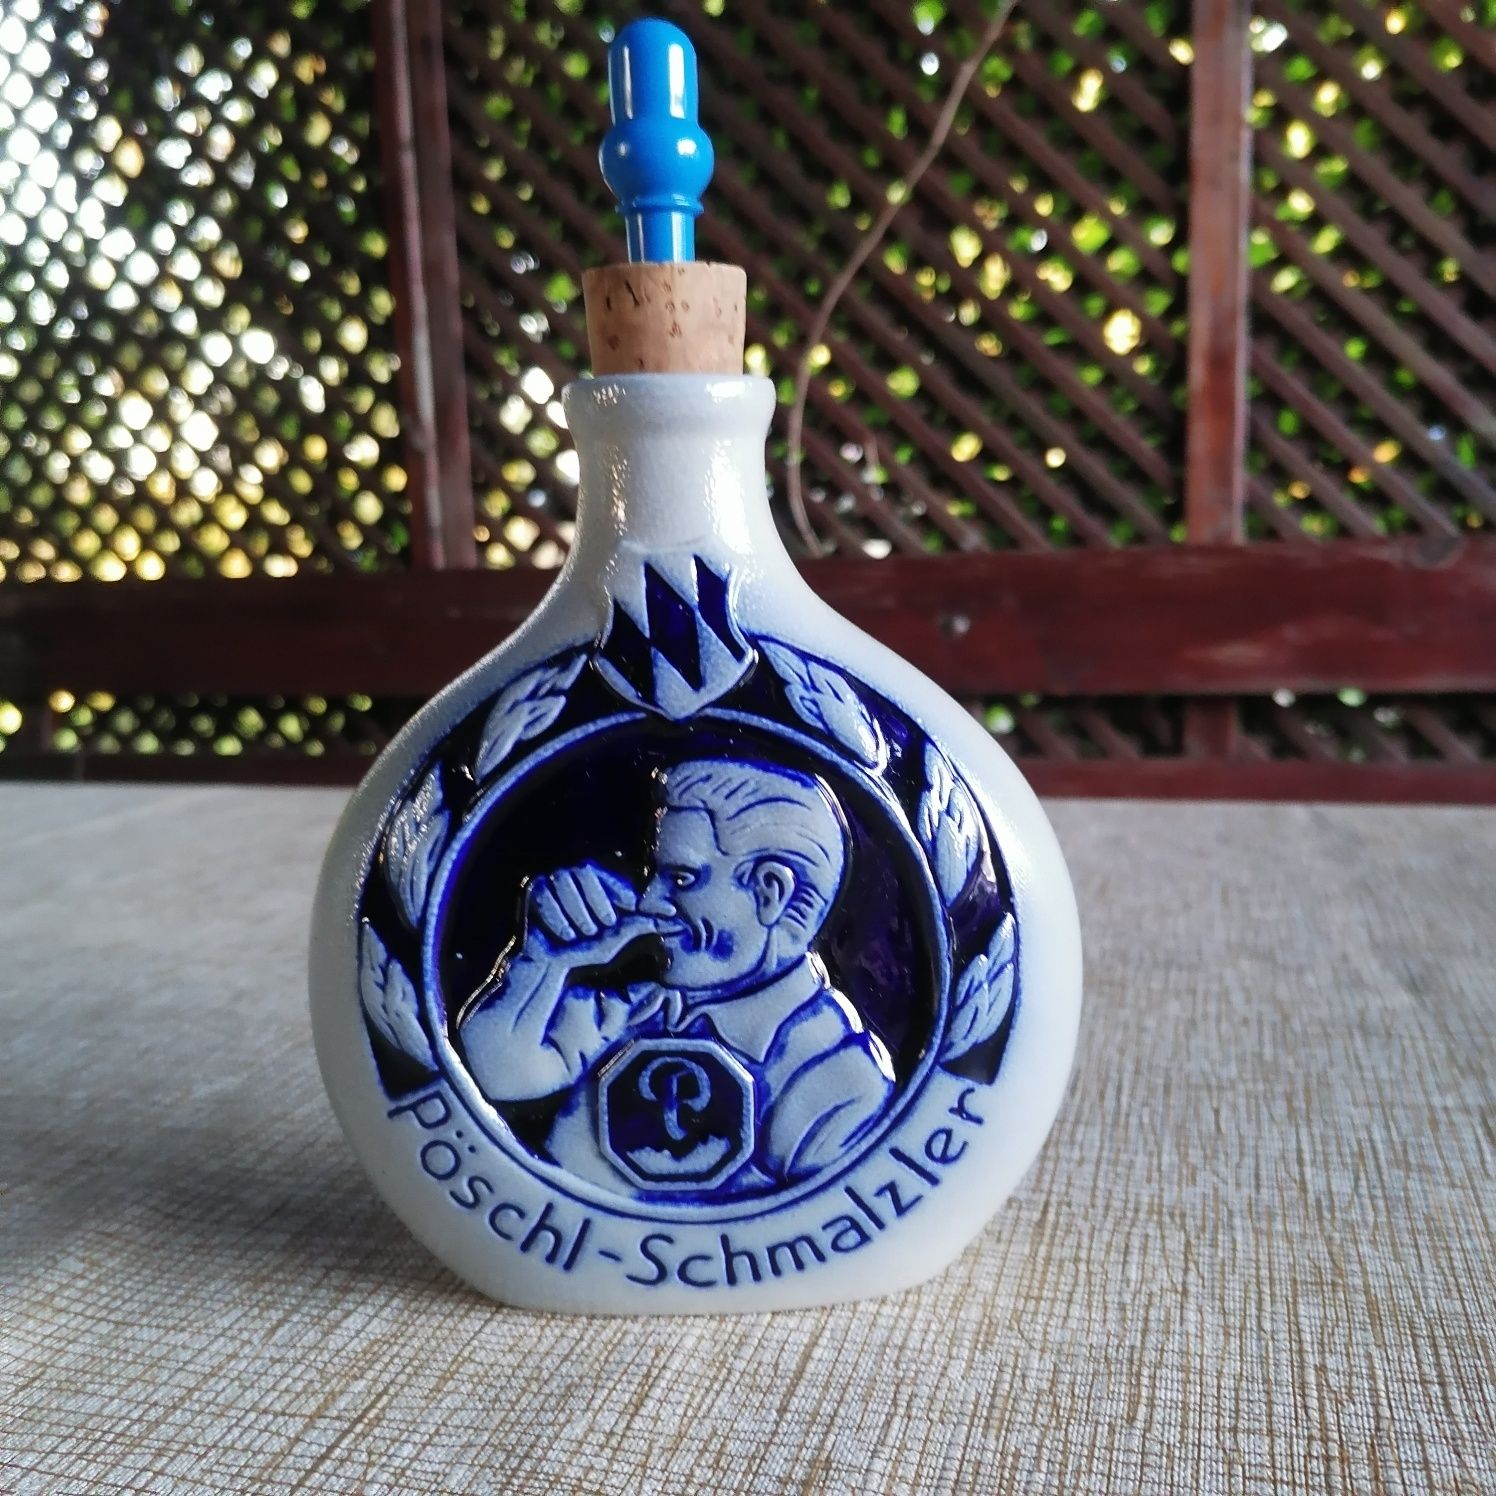 Kolekcjonerska ozdobna butelka karafka na tabakę Poschl Schmalzler